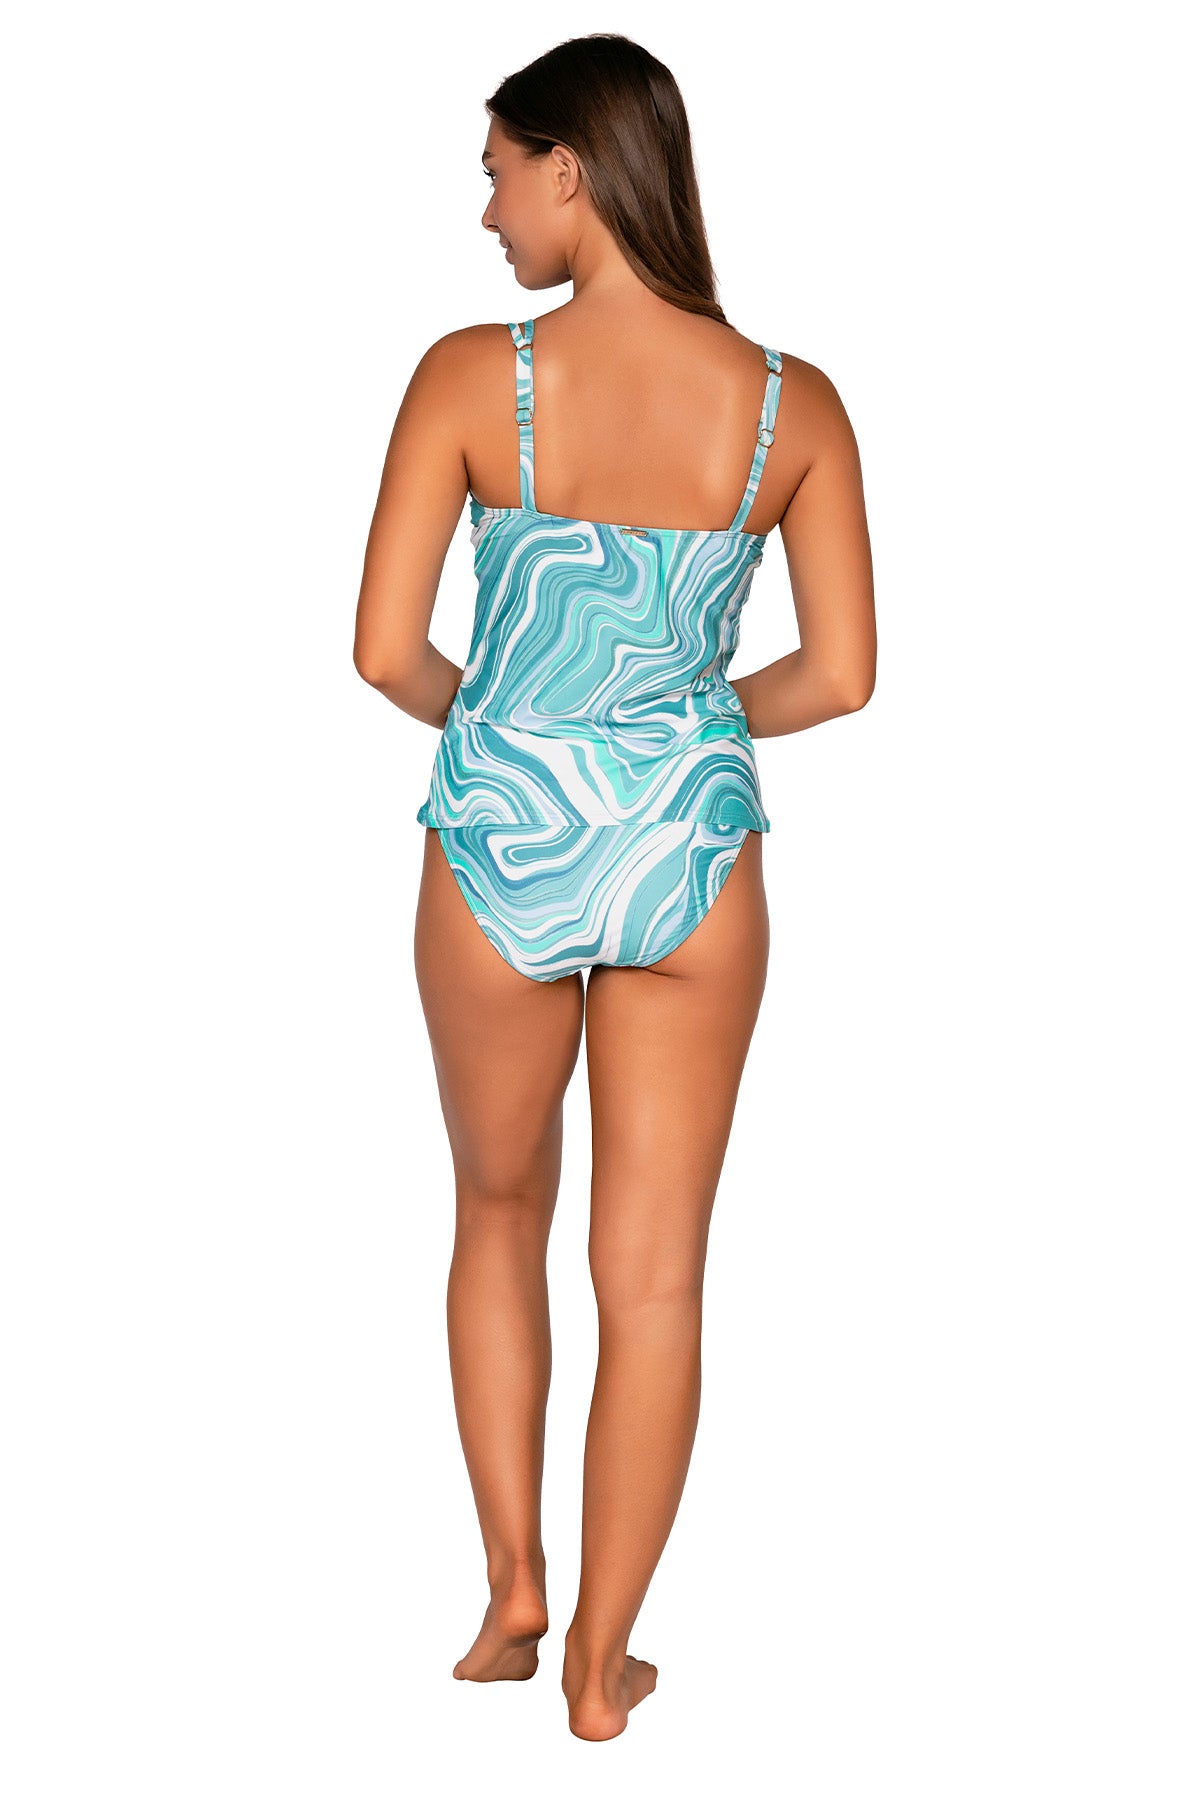 Back view of Sunsets Moon Tide Taylor Tankini Top with matching Hannah High Waist bikini bottom